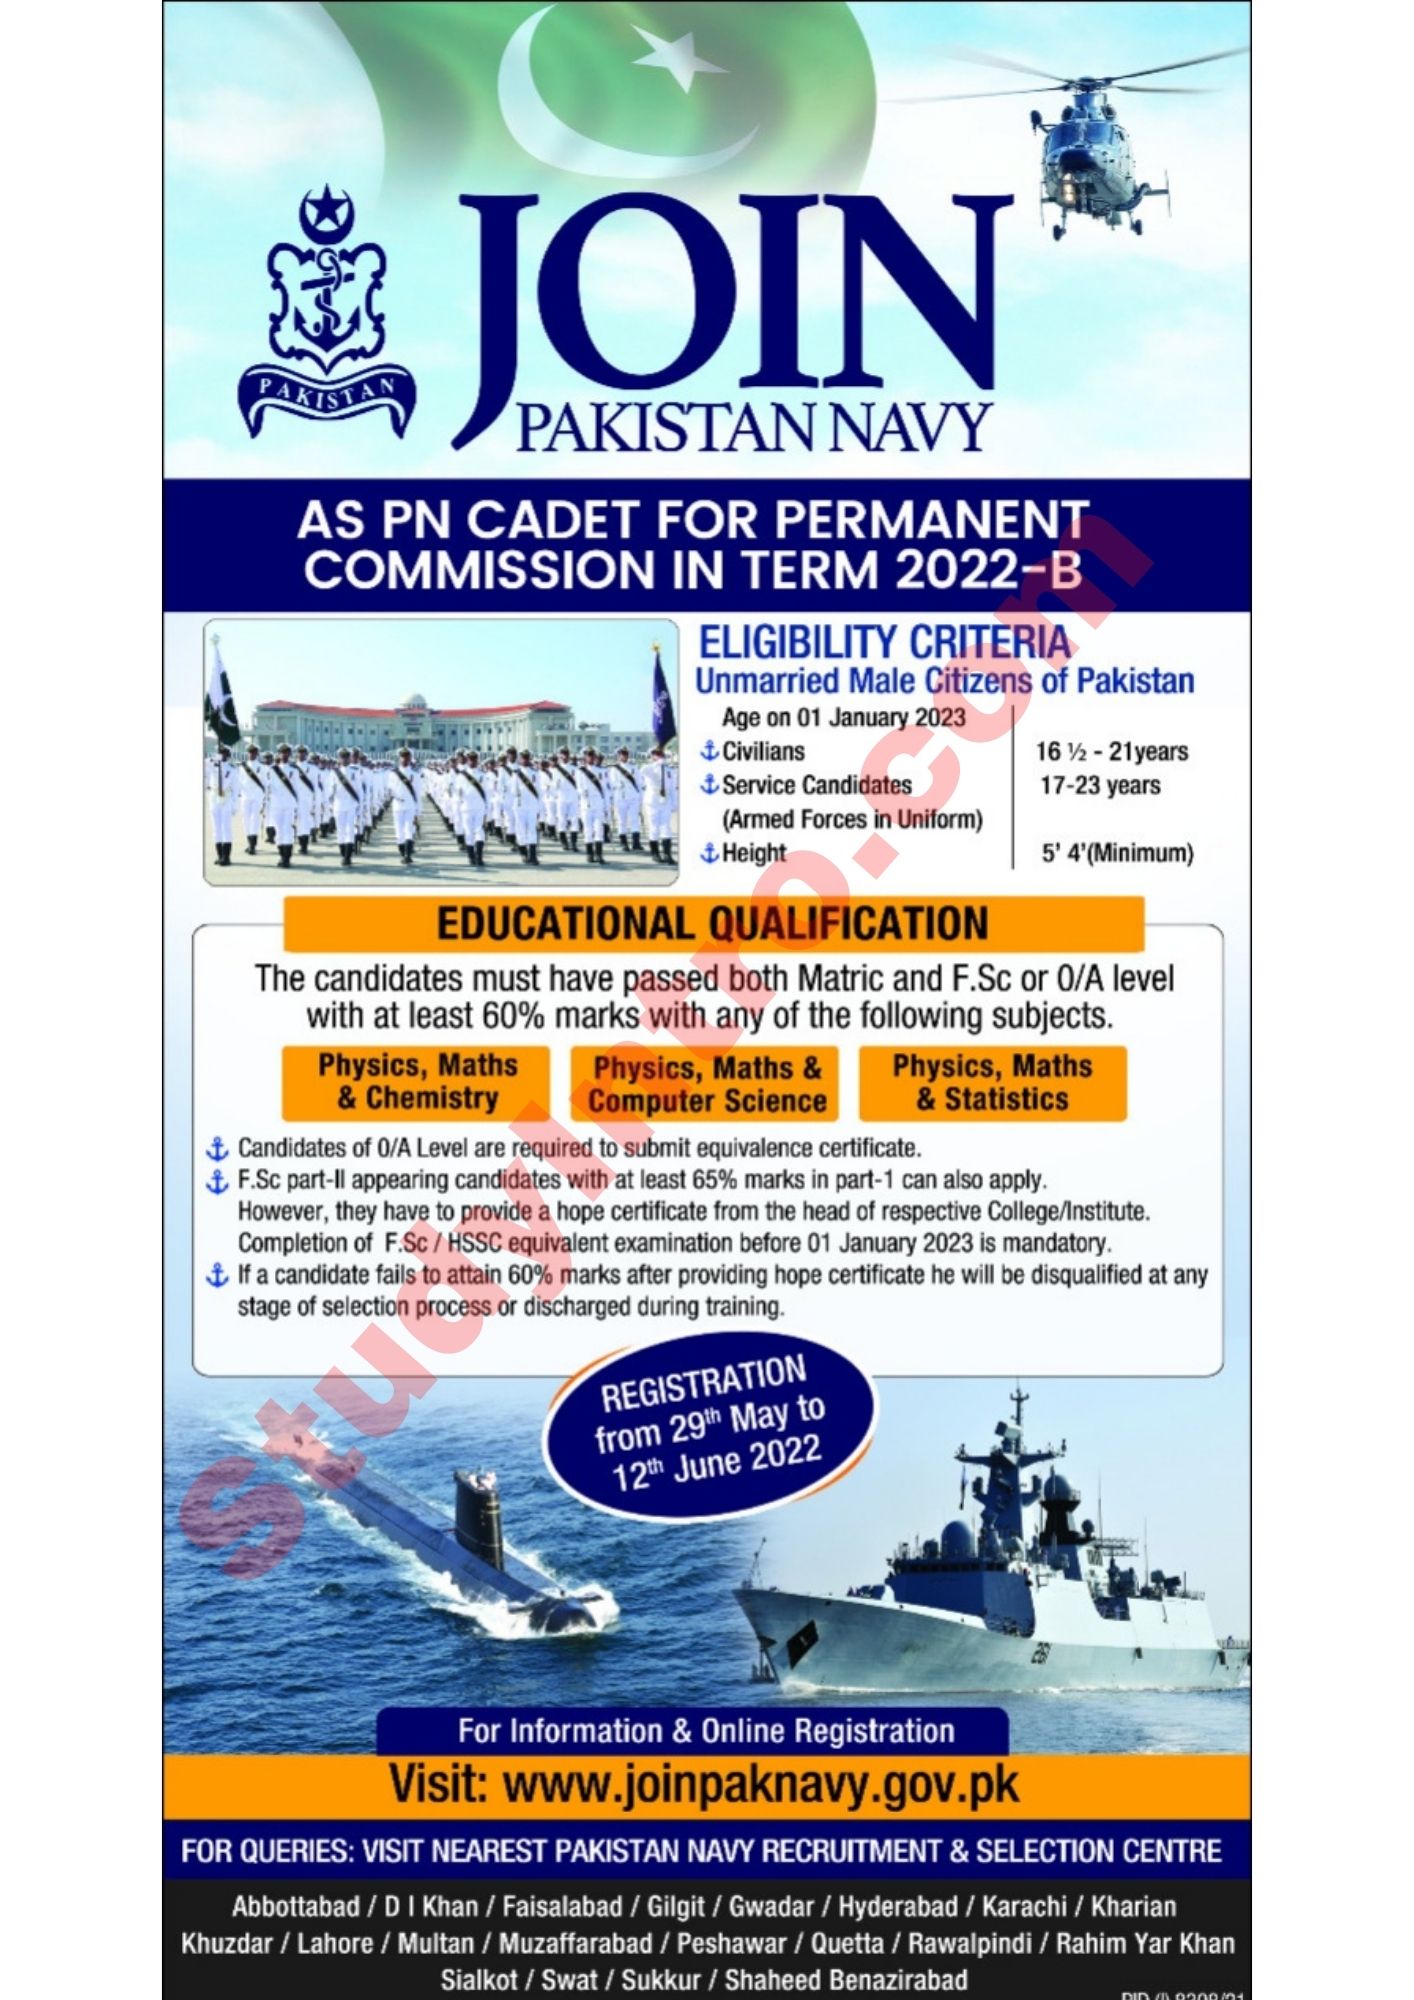 Join Pakistan Navy as PN Cadet 2022-B